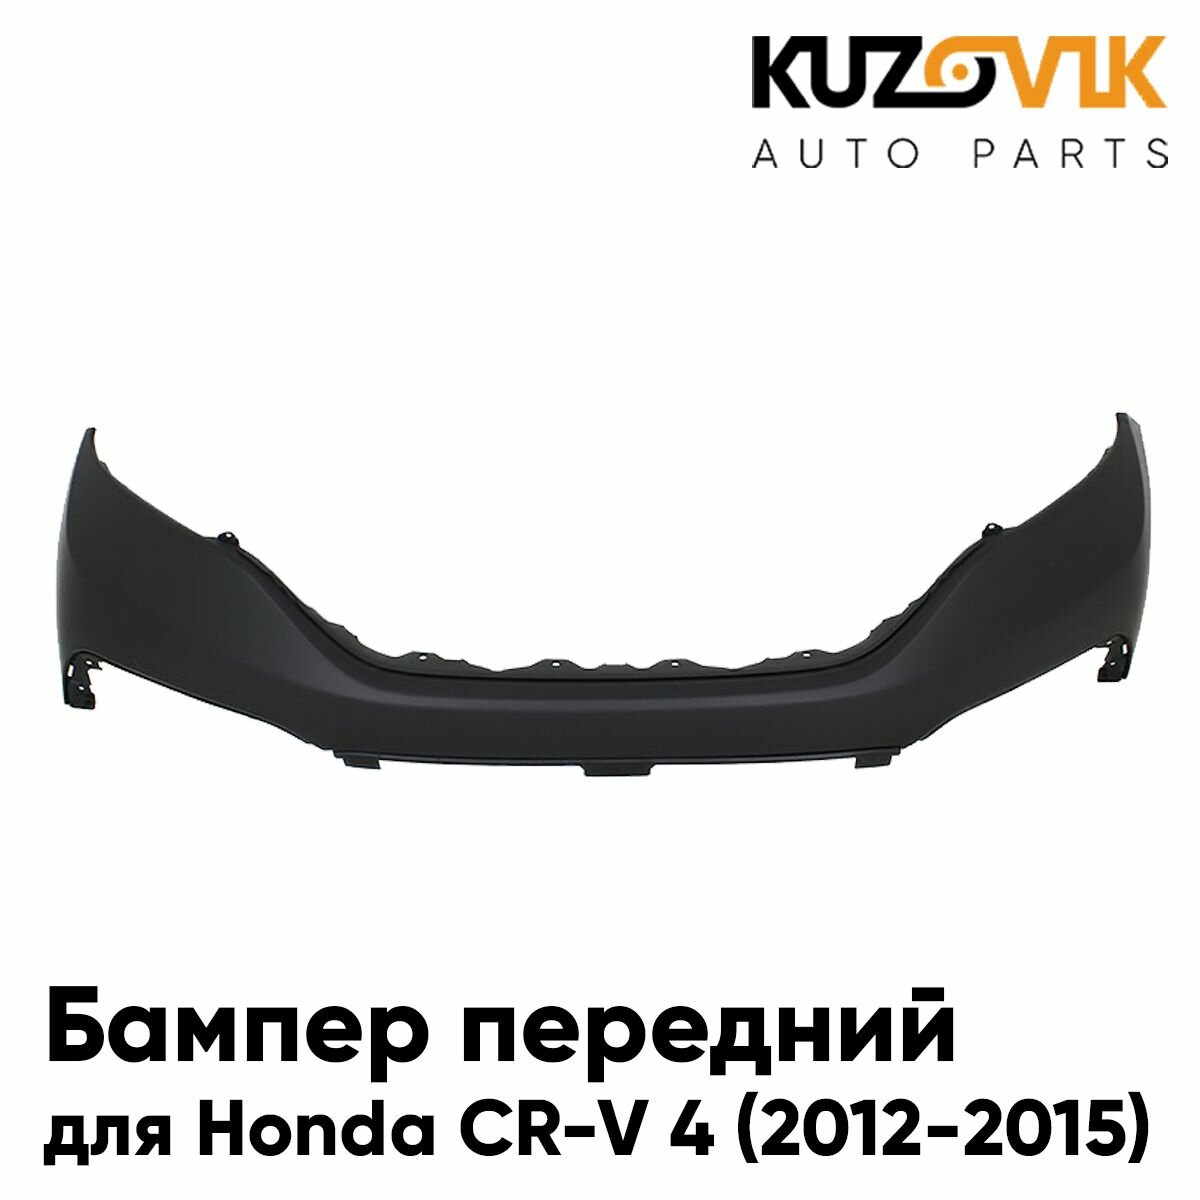 Бампер передний для Хонда Honda CR-V 4 (2012-2015) верхняя часть